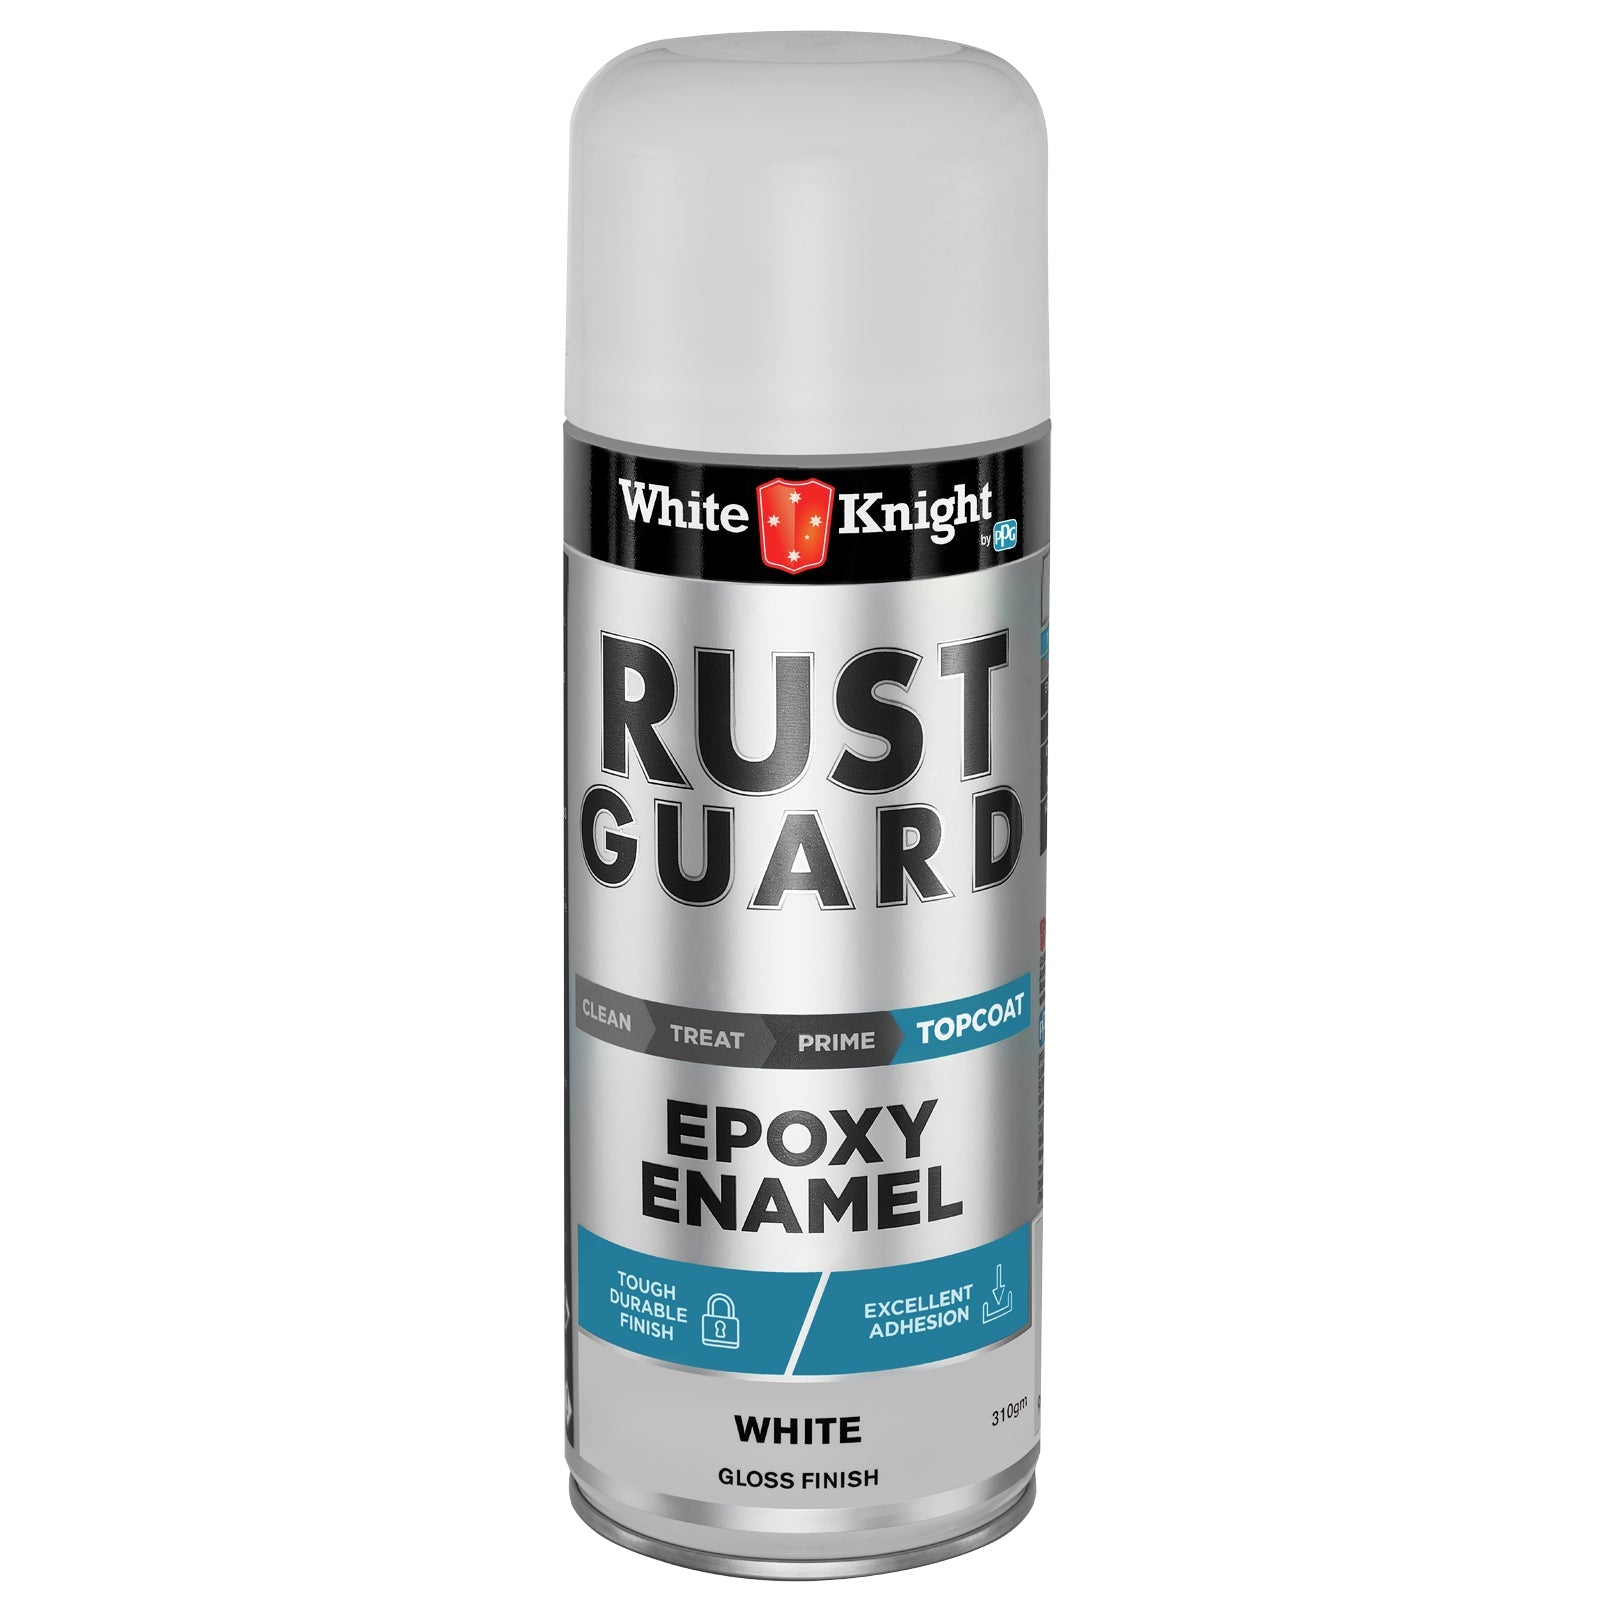 White Knight Rust Guard Gloss White Epoxy Enamel Spray Paint 310g 375520/310GM - Double Bay Hardware